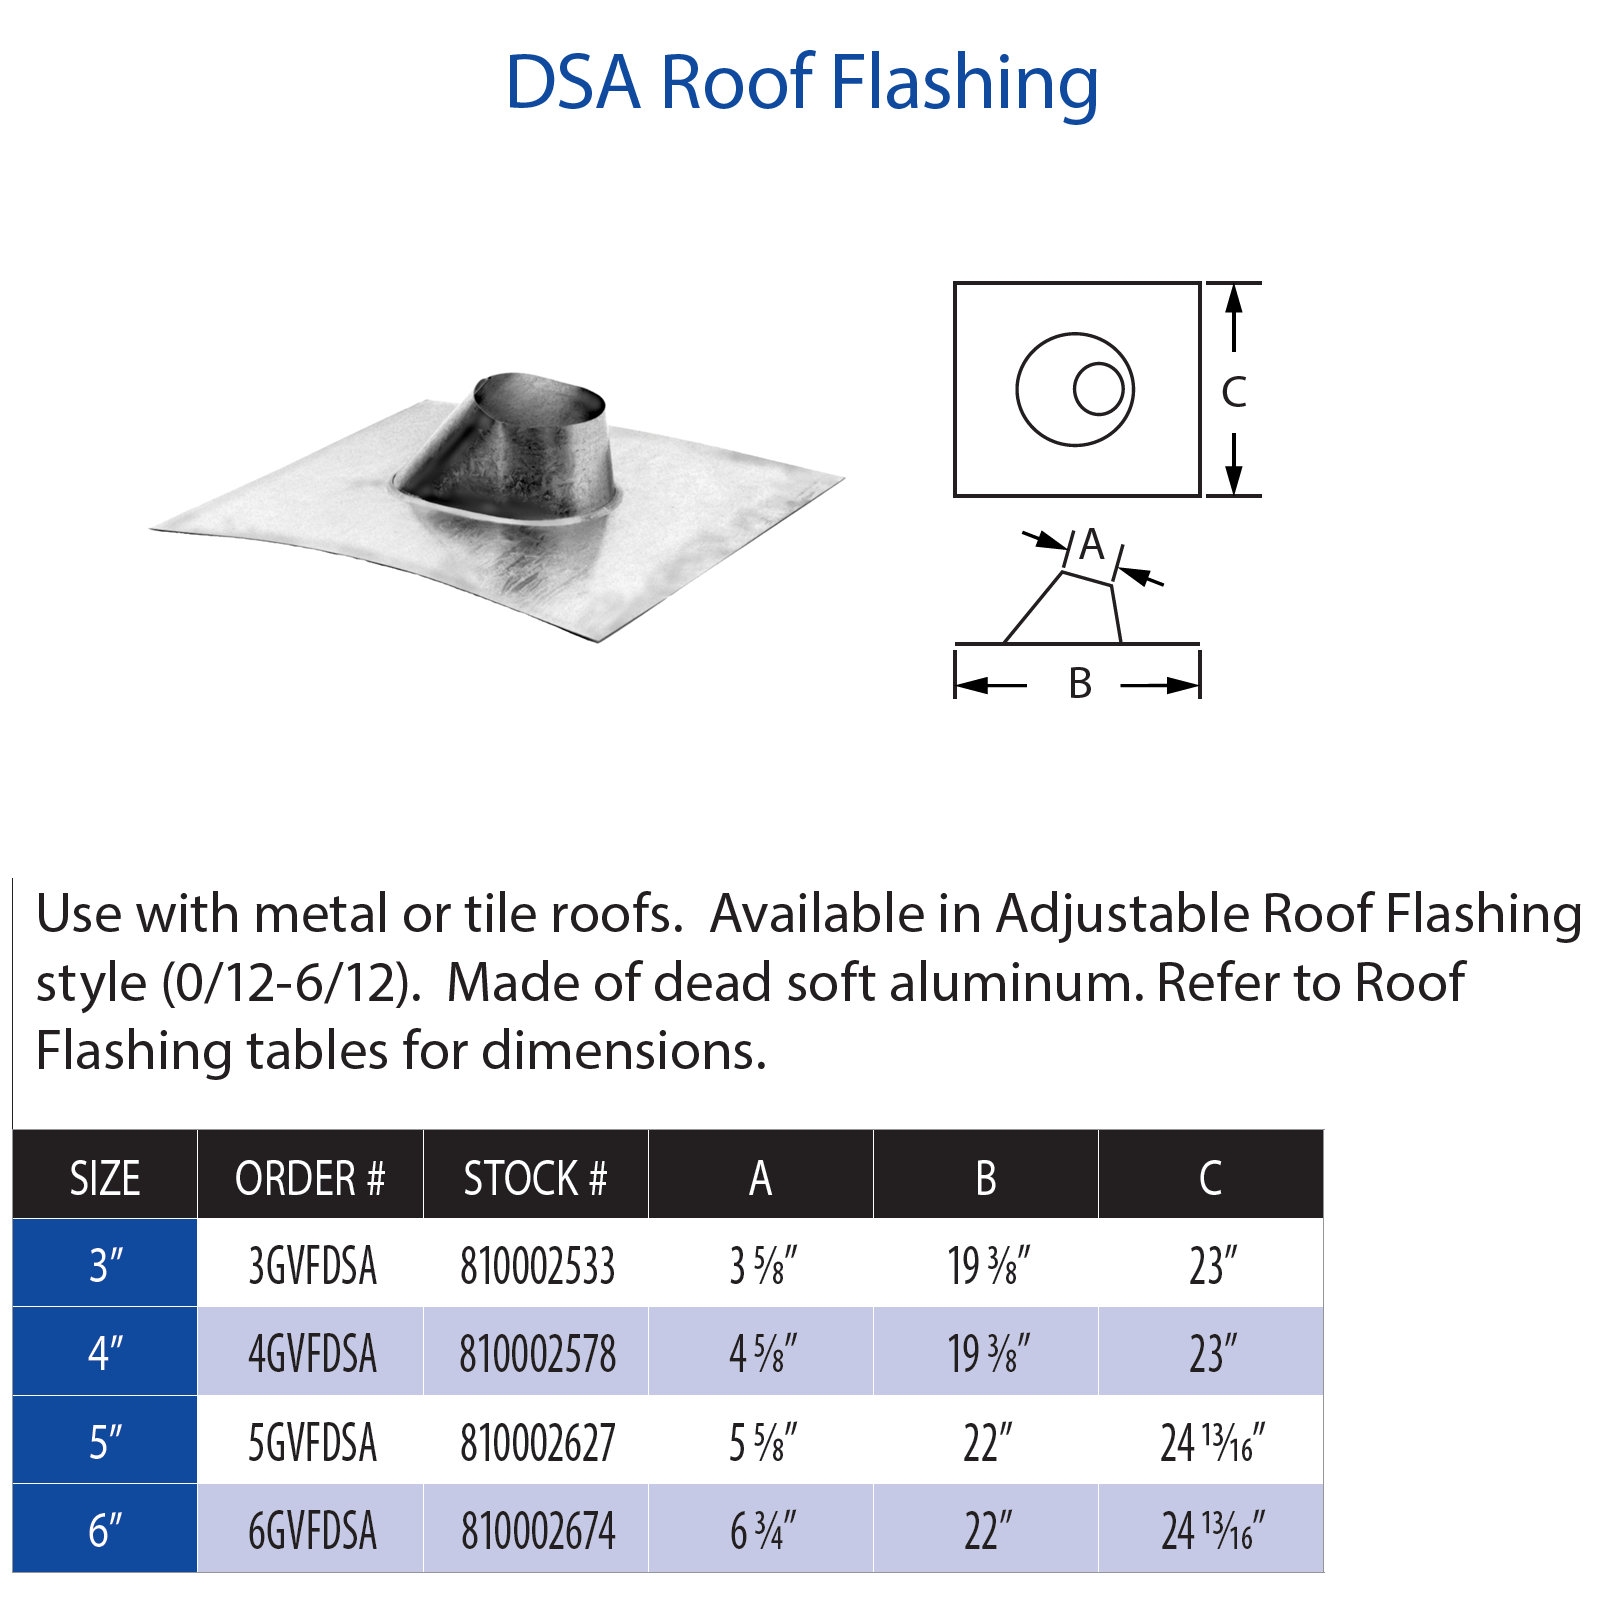 DuraVent Type B 5" DSA Roof Flashing | 5GVFDSA